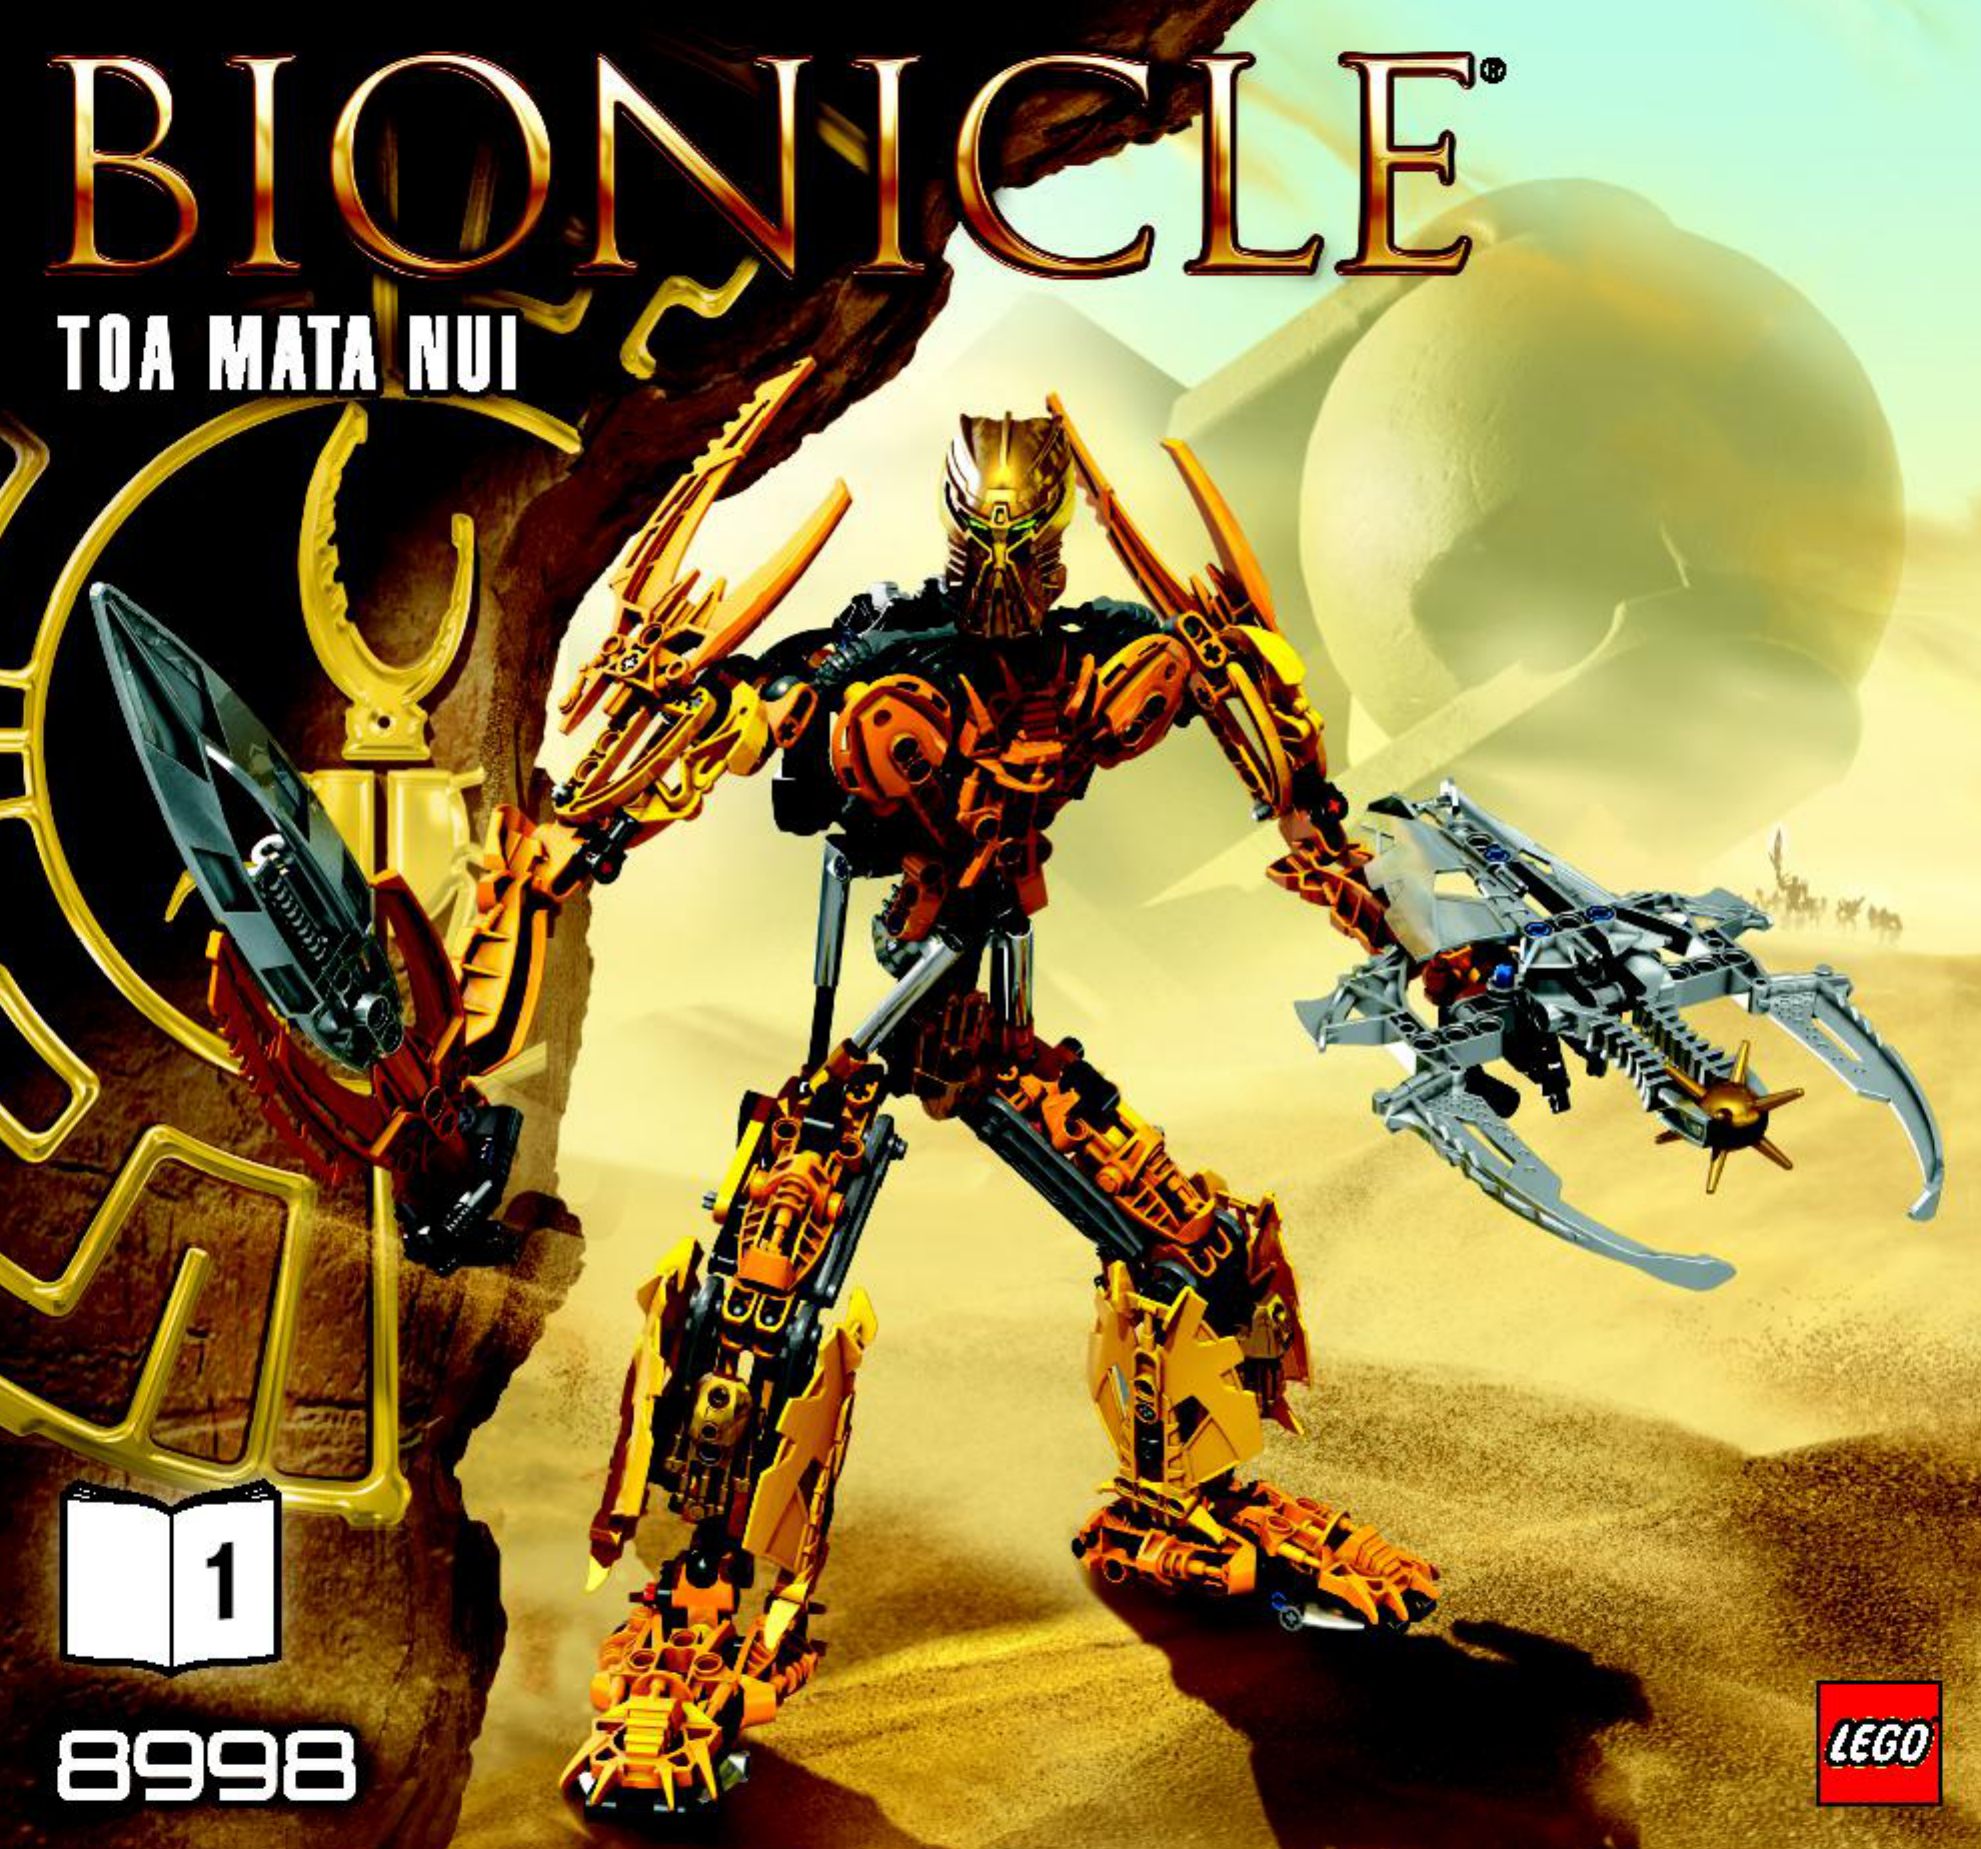 Bionicle mata. Бионикл: тоа мата - Нуи (2009):. 8998 Тоа мата Нуи.